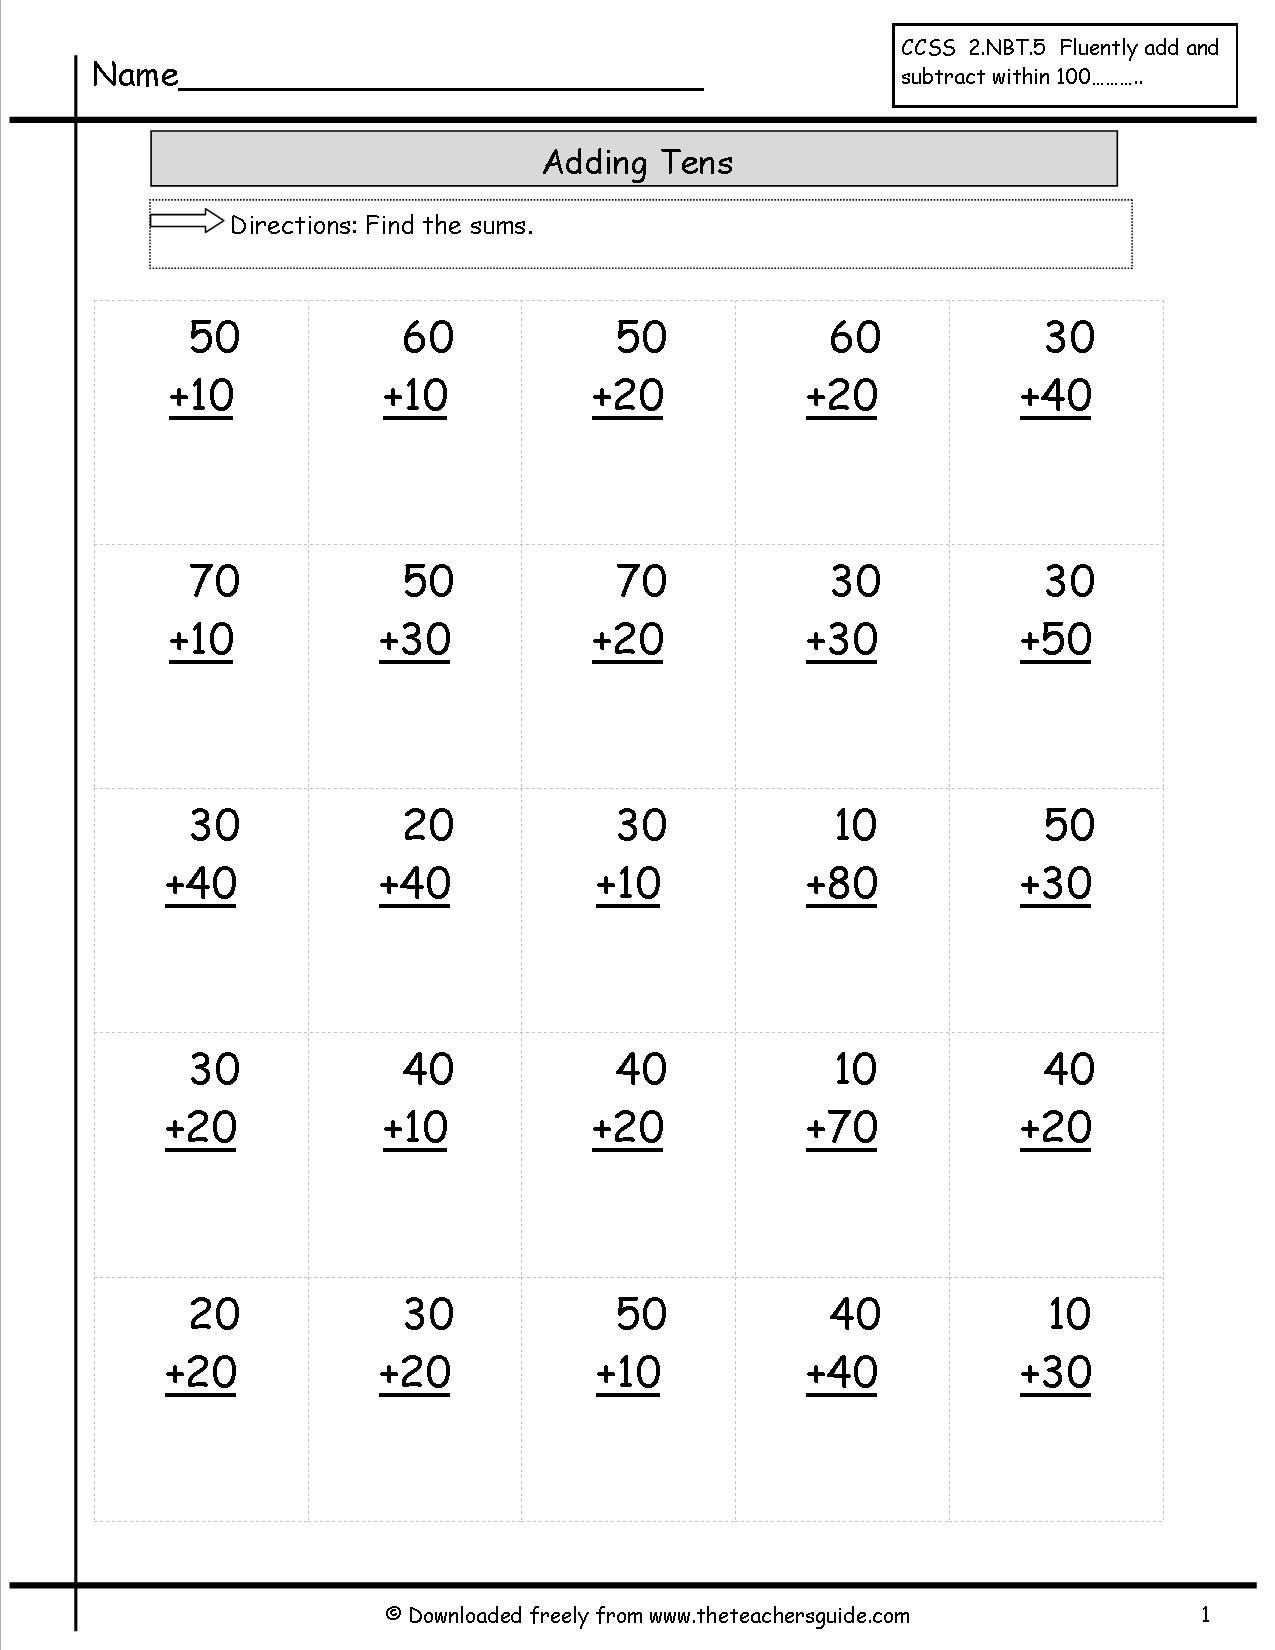 15-best-images-of-adding-hundreds-worksheets-adding-two-digit-numbers-worksheet-3-digit